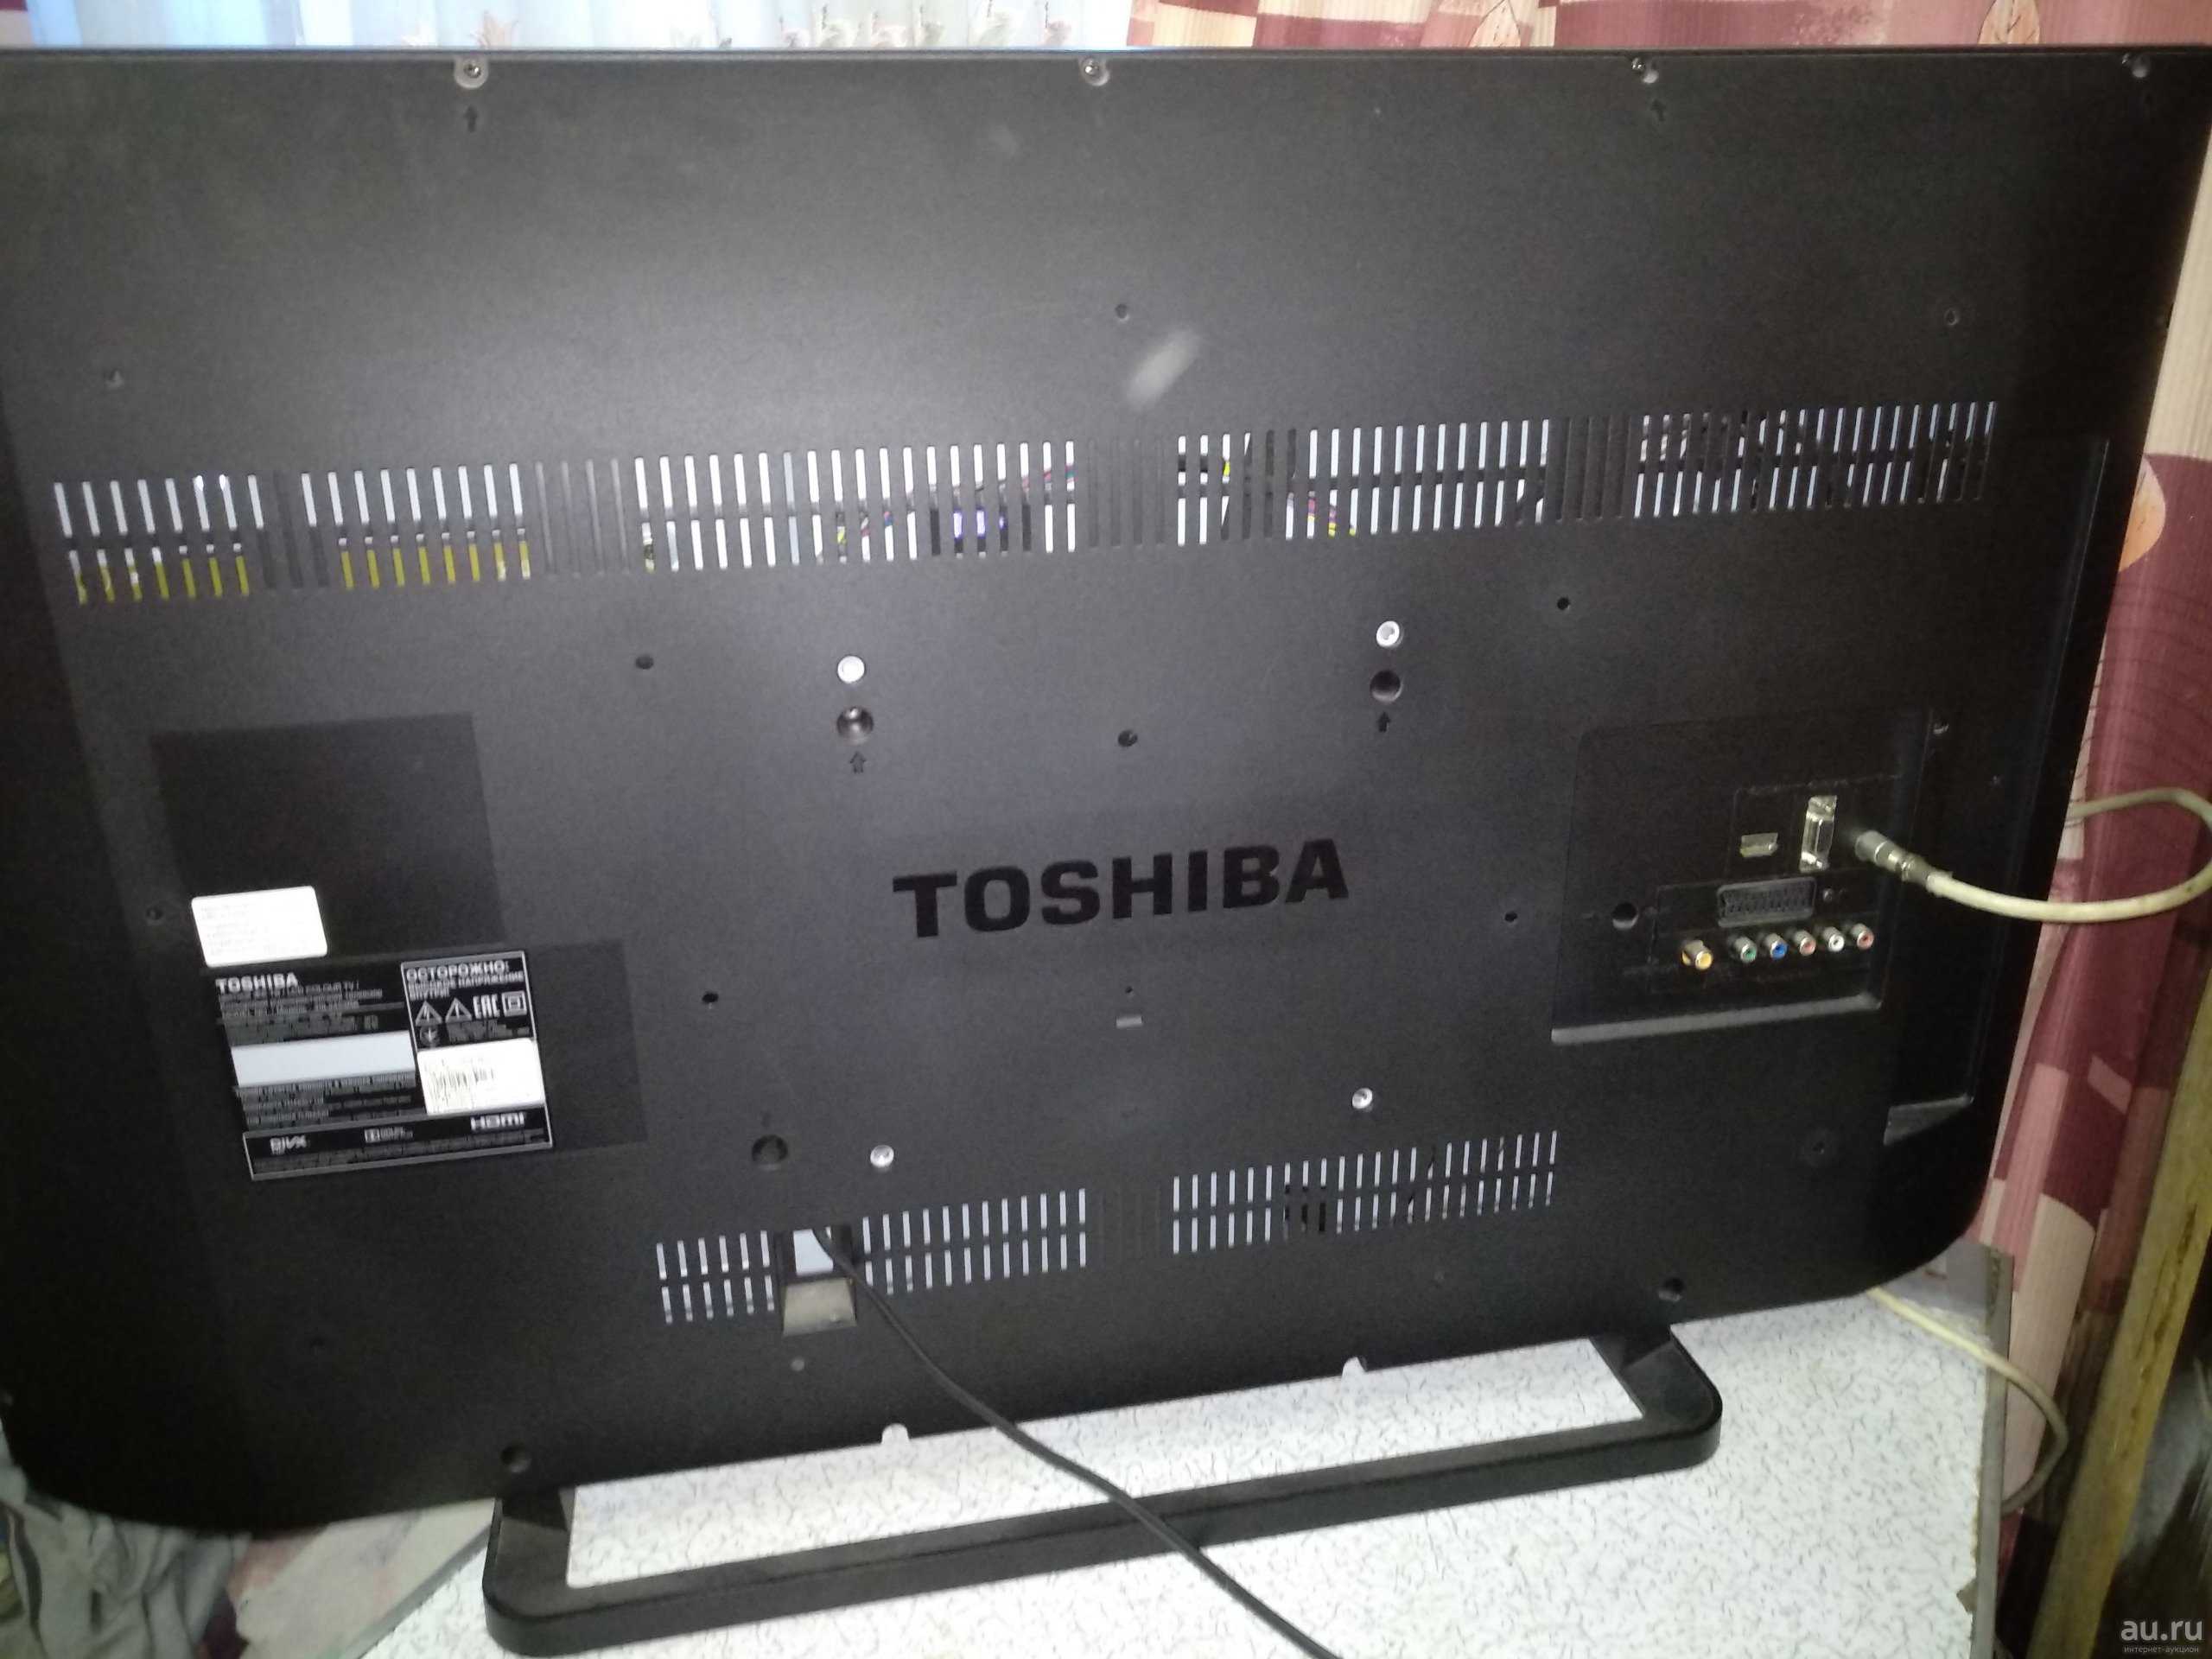 Жк-телевизор toshiba 40l6353rk в россии. купить жк-телевизор toshiba 40l6353rk. цены на жк-телевизор toshiba 40l6353rk. где купить жк-телевизор toshiba 40l6353rk?